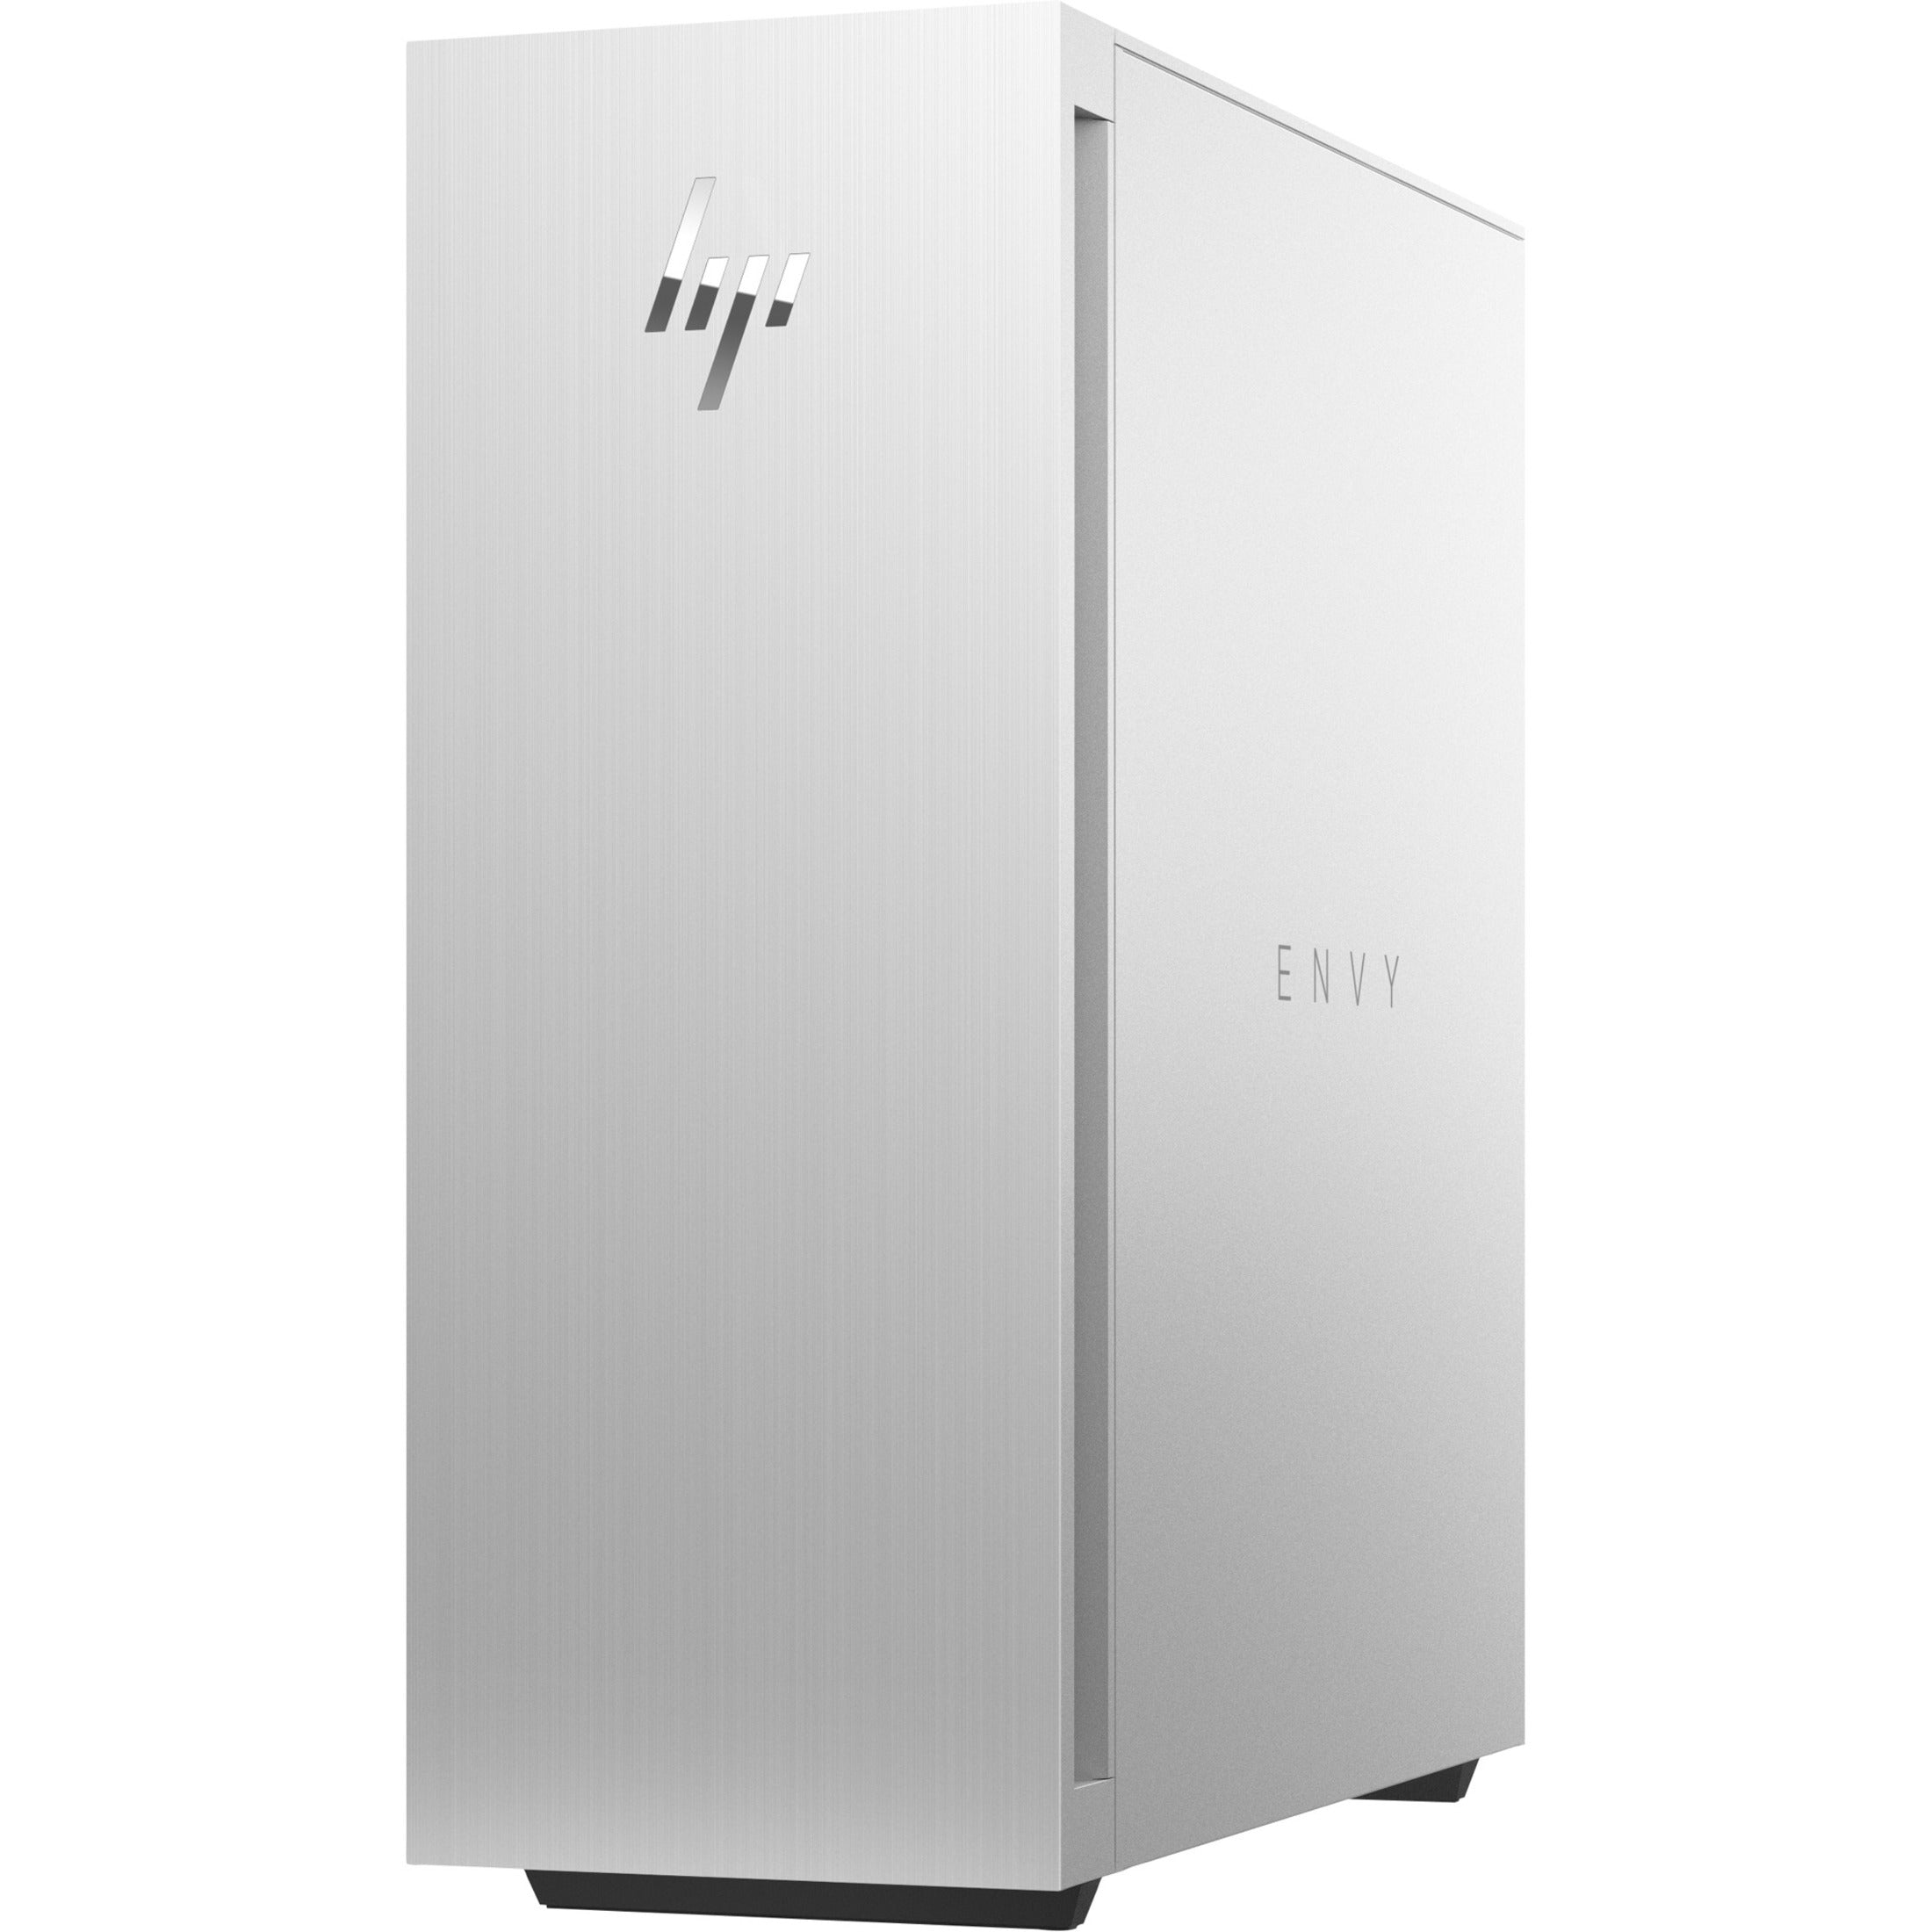 HP Envy TE02-0187c Desktop Computer, Intel Core i7 12th Gen i7-12700 Dodeca-core, 32GB RAM, 1TB HDD, 512GB SSD, Mini-tower, Natural Silver, Refurbished